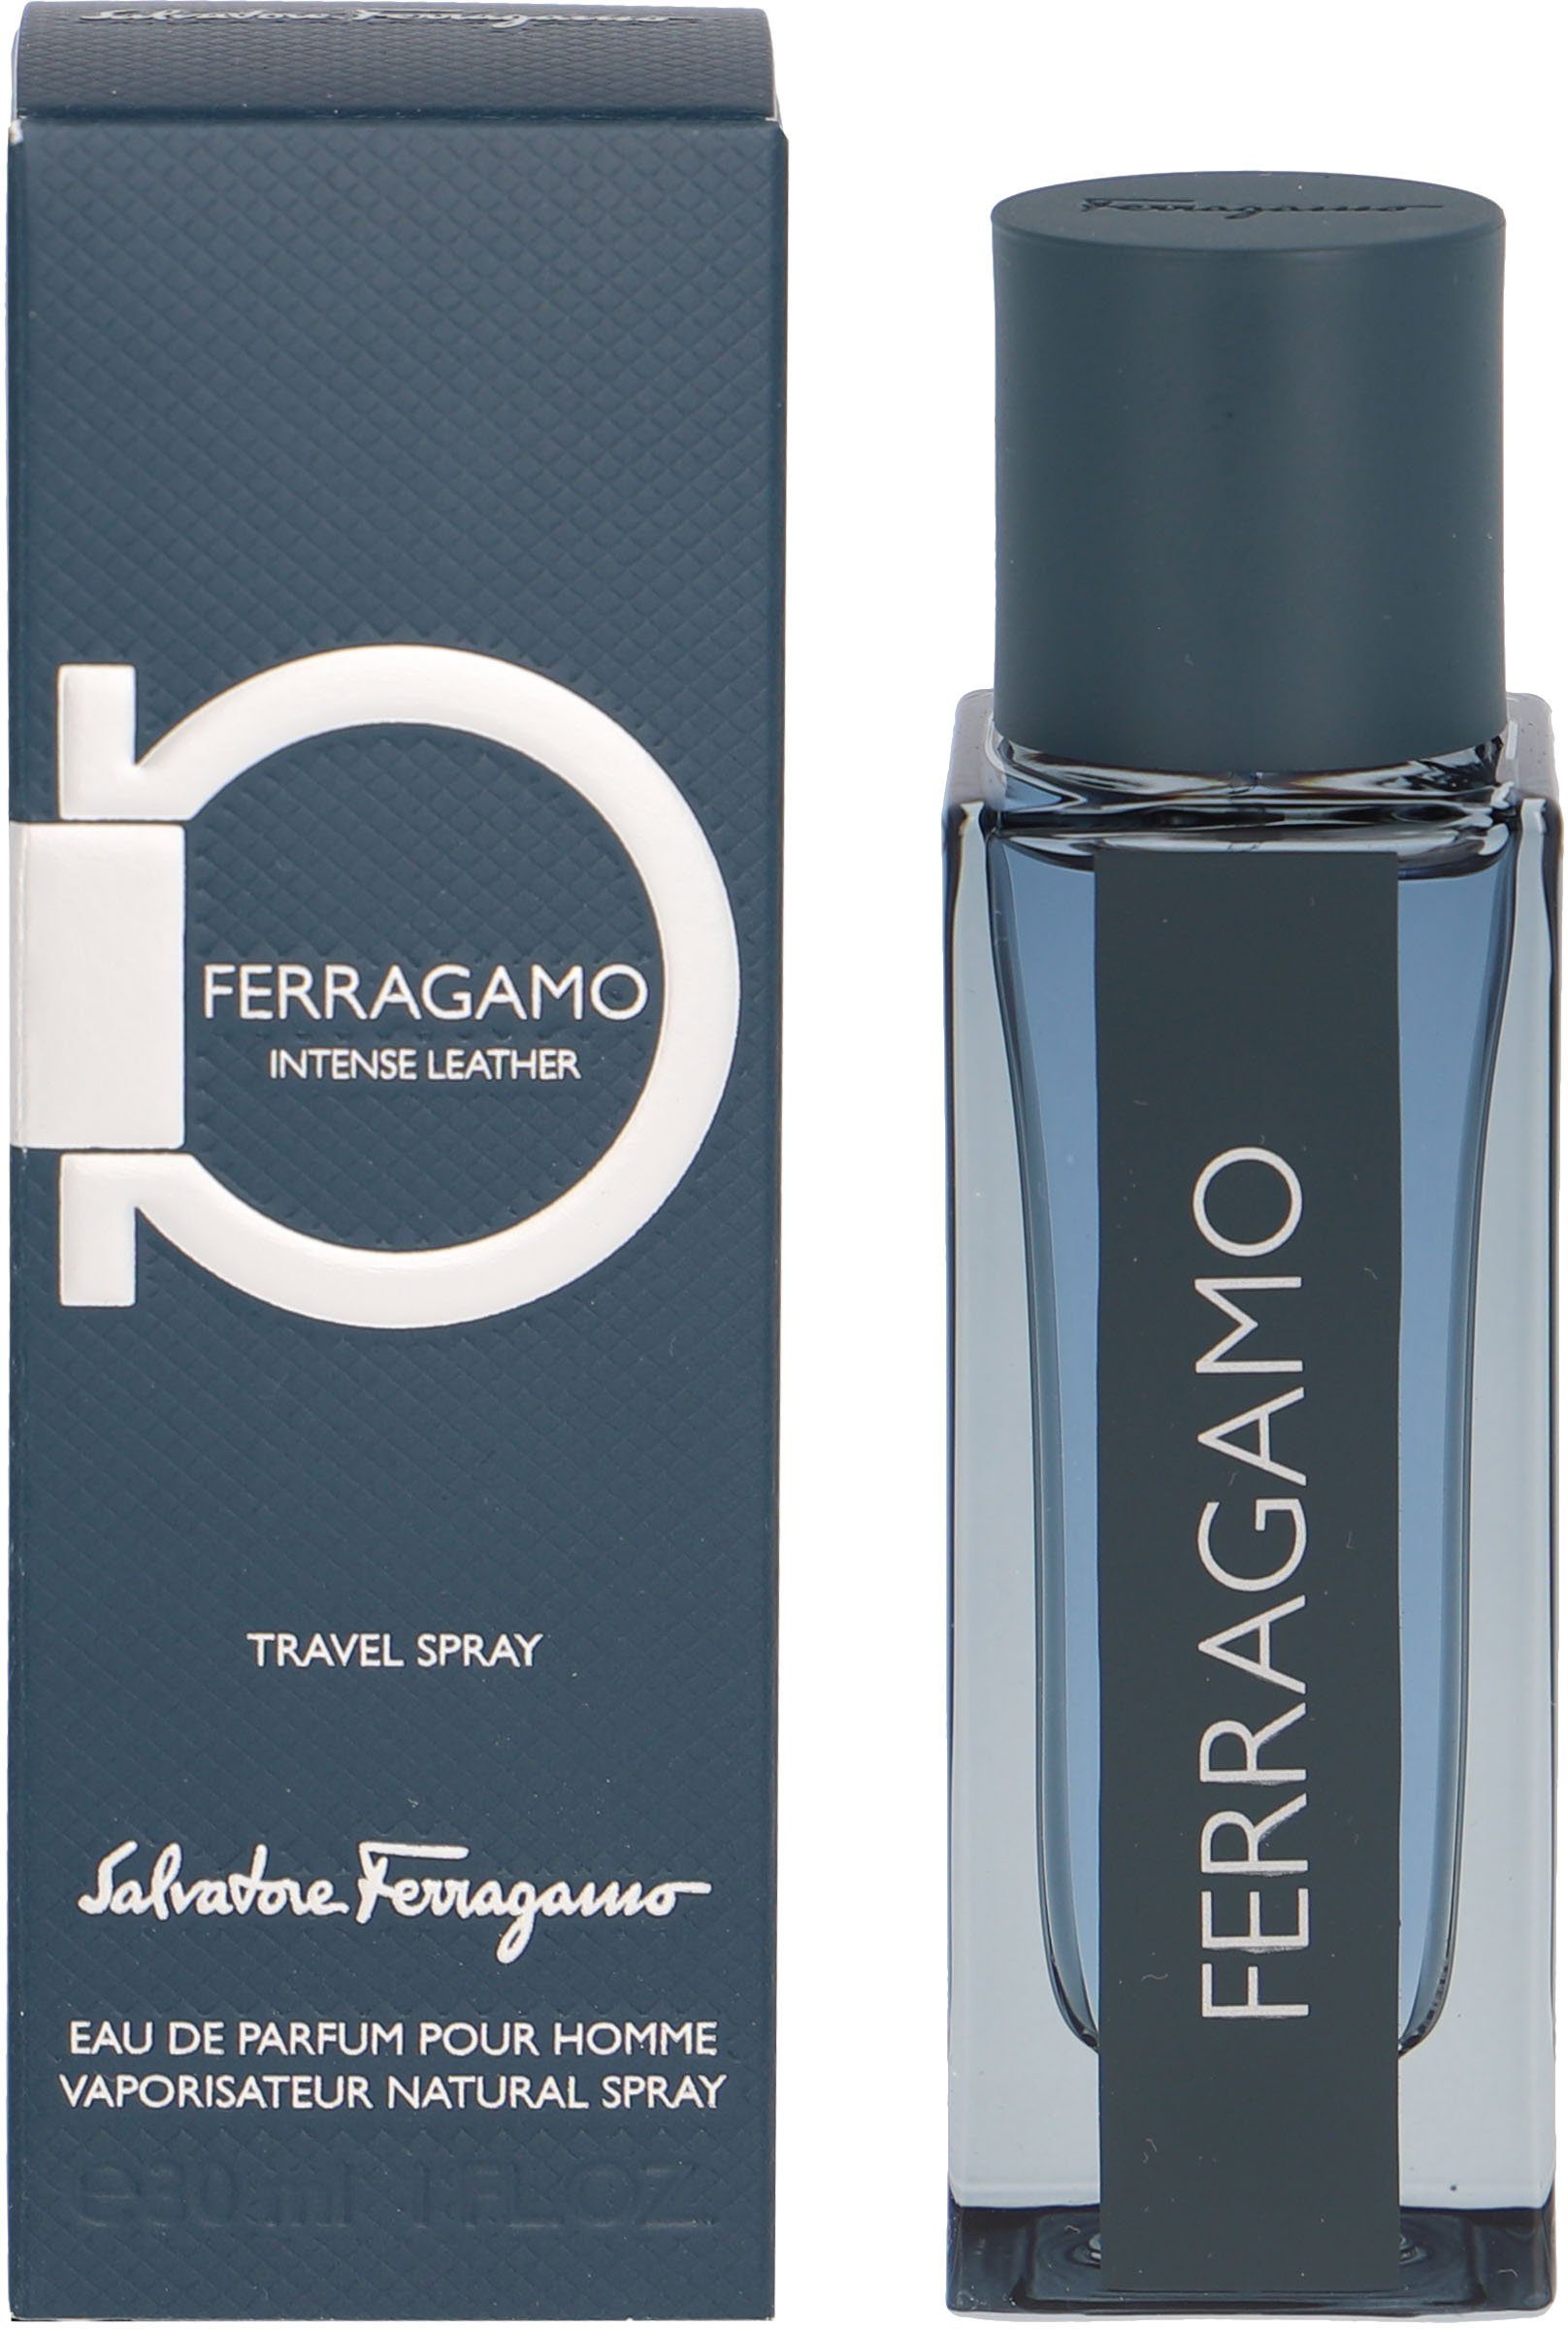 Salvatore Ferragamo Eau de Parfum Leather Intense